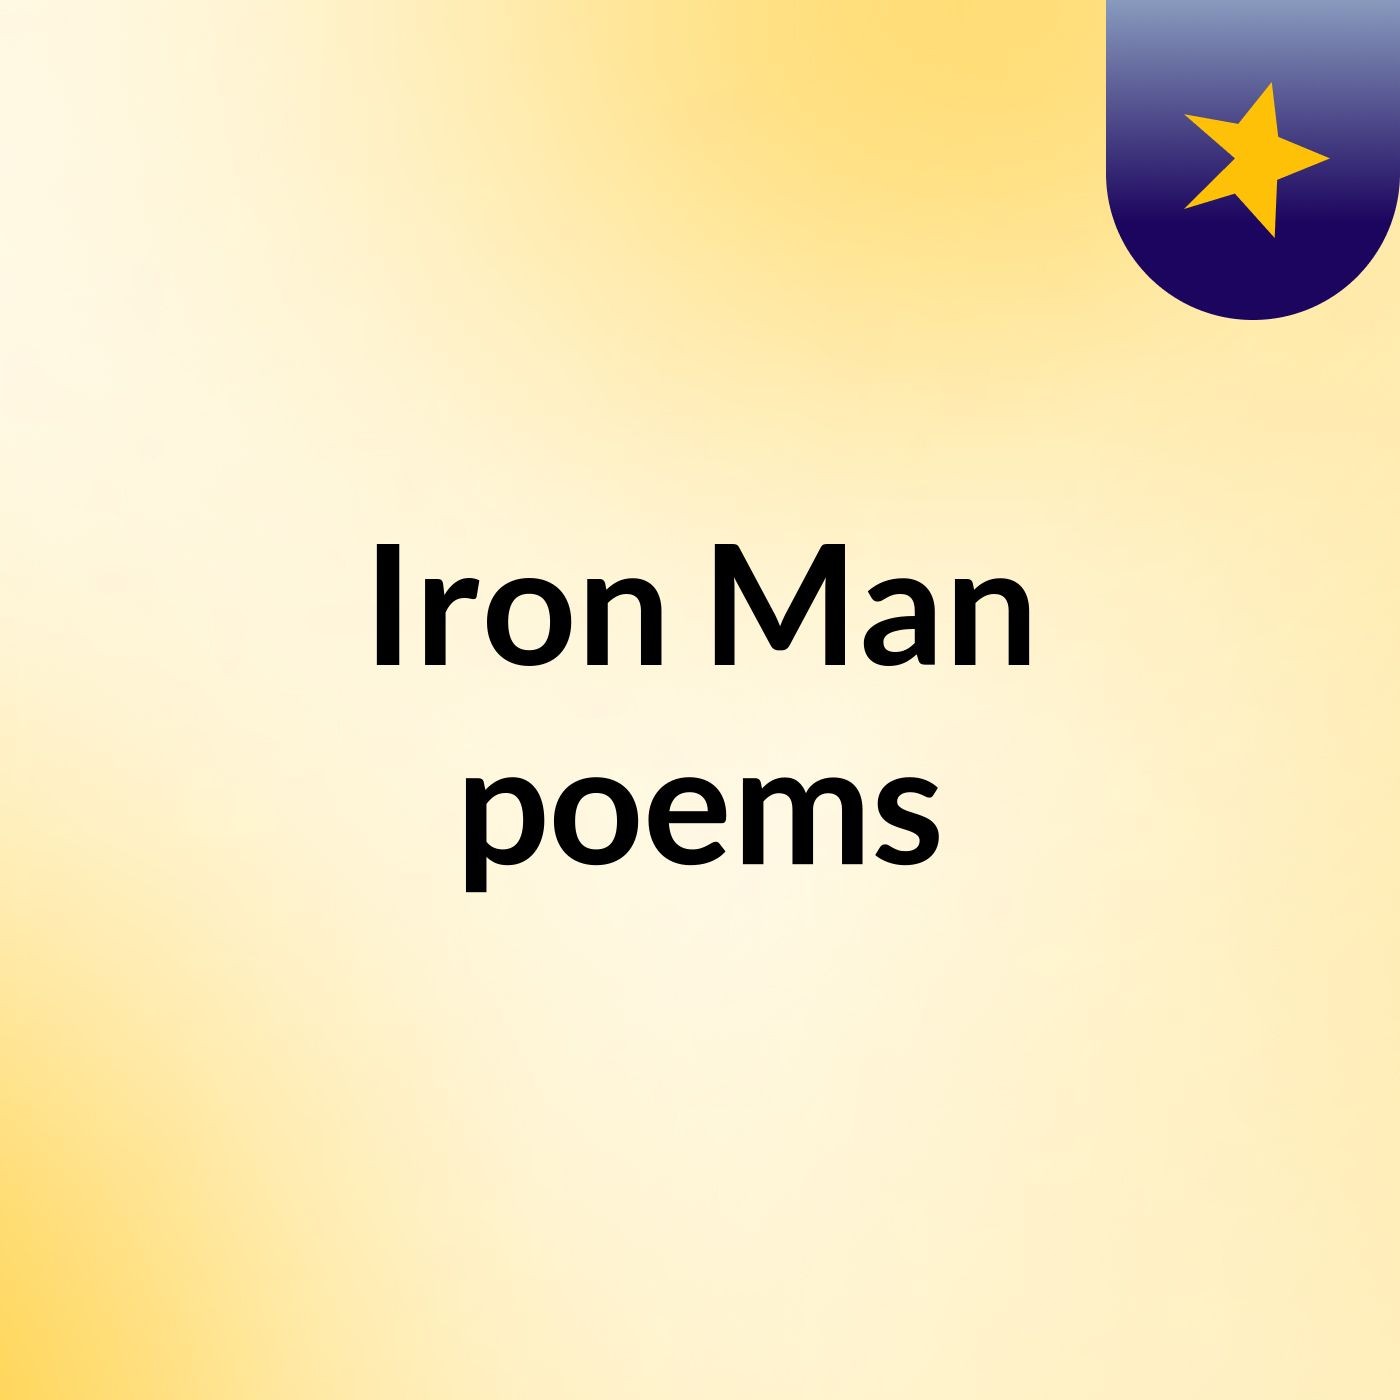 Iron Man poems